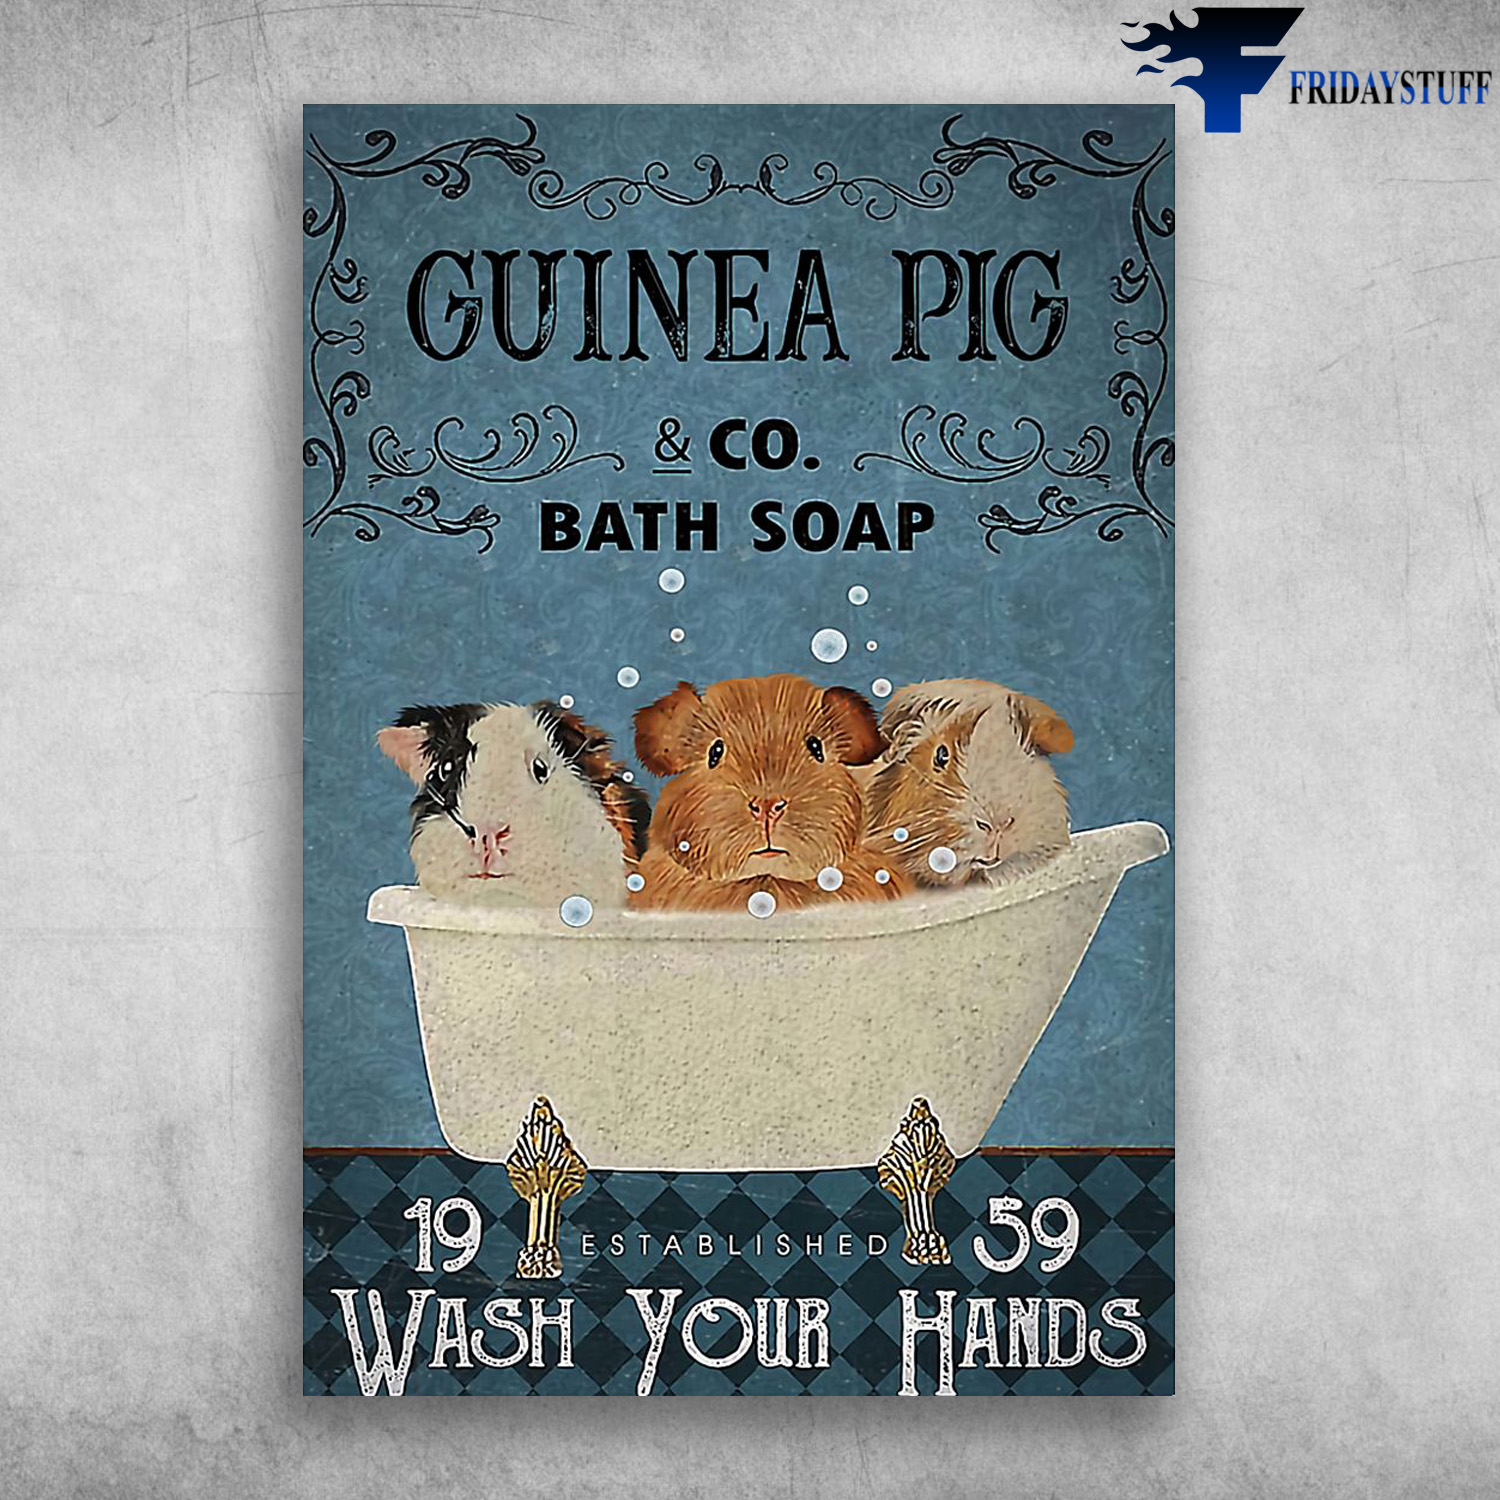 Guinea Pig In Bath Soap - Bath Soap, 19 Established 59, Wash Your Fins